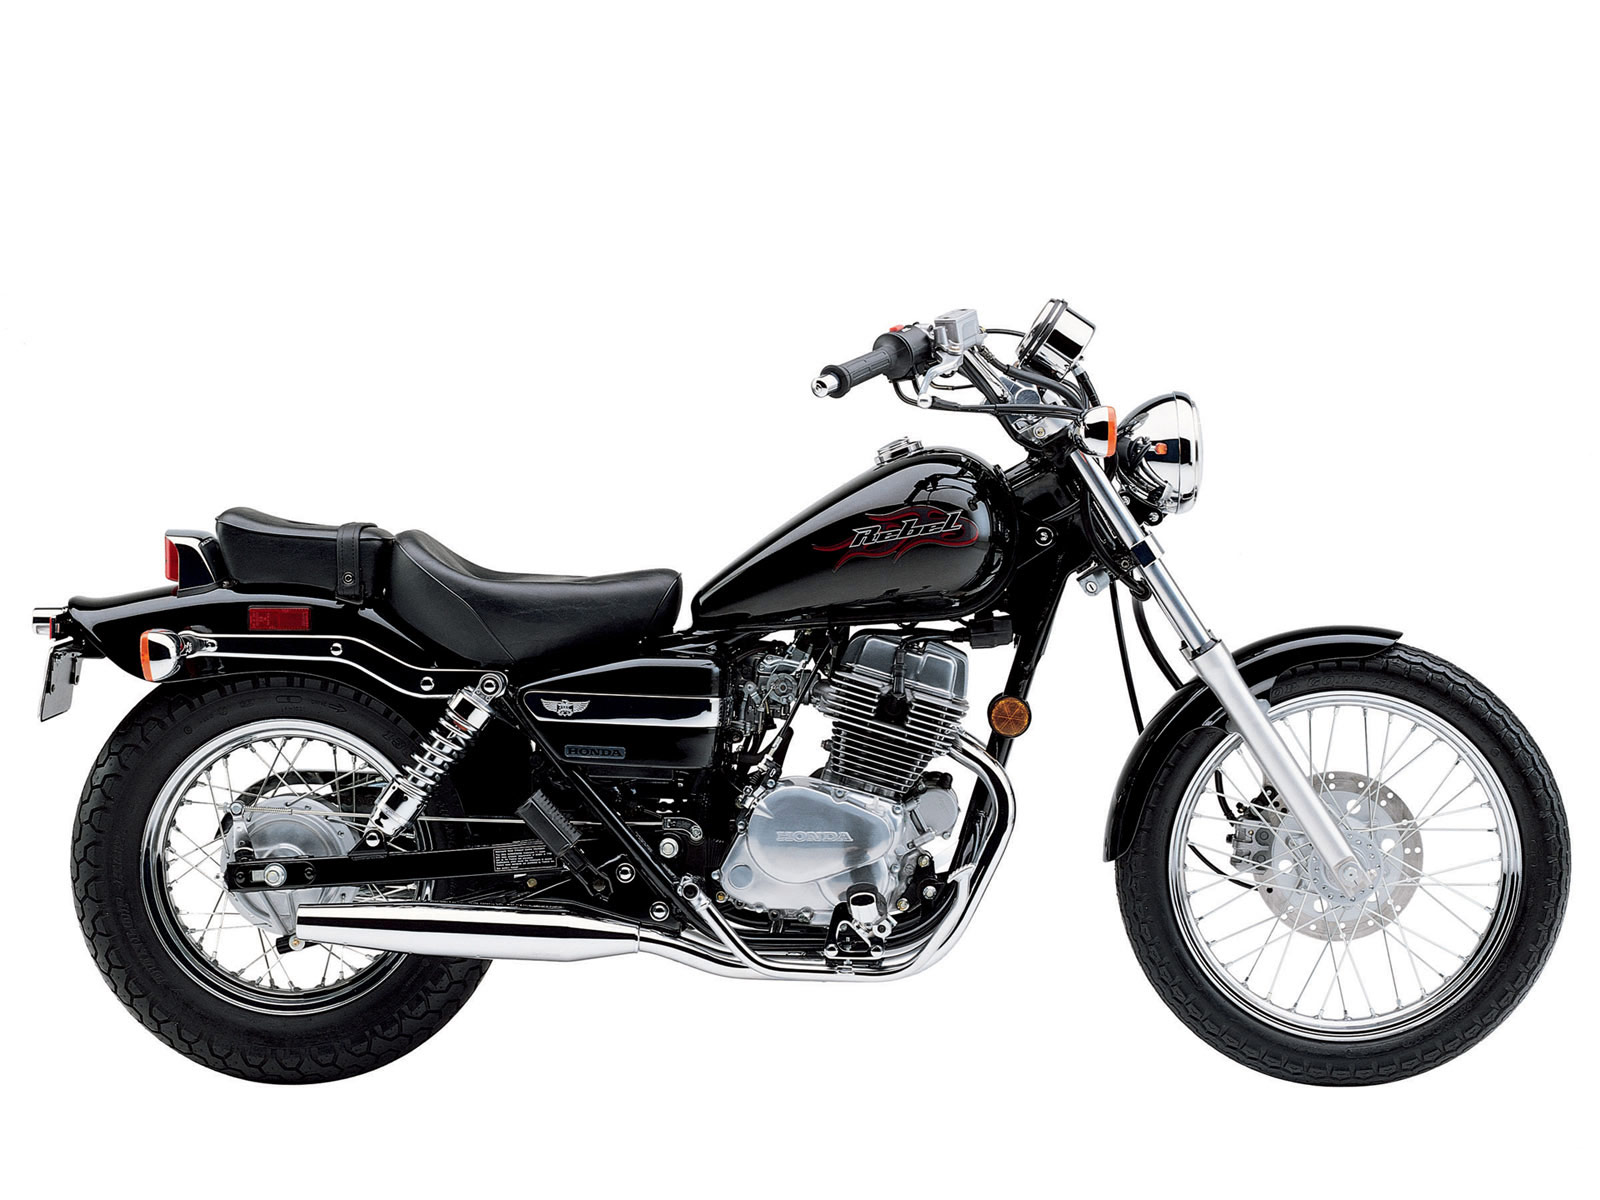 honda motorcycle wallpaper,land vehicle,motorcycle,vehicle,motor vehicle,fuel tank